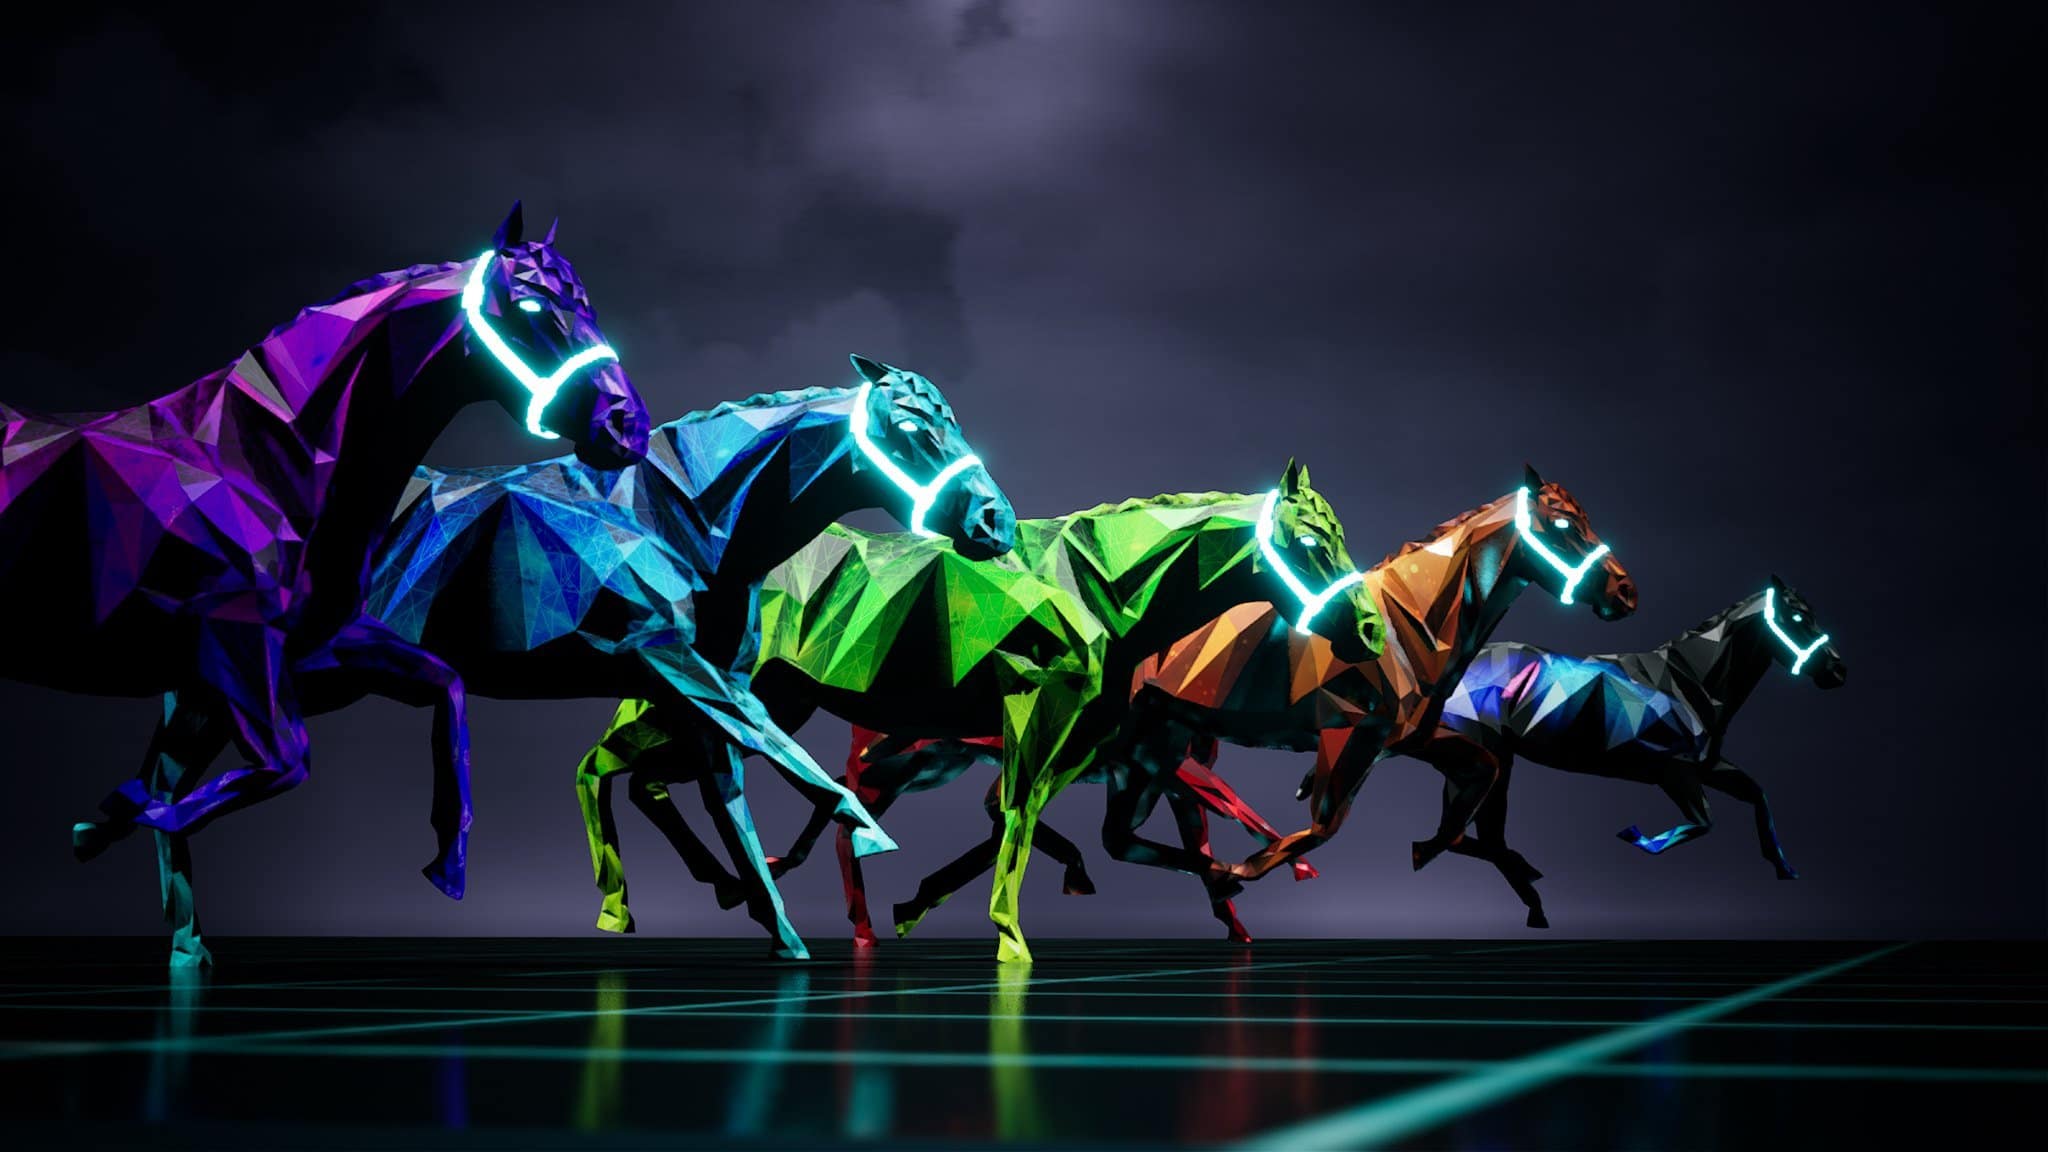 Virtual horseracing game Zed Run